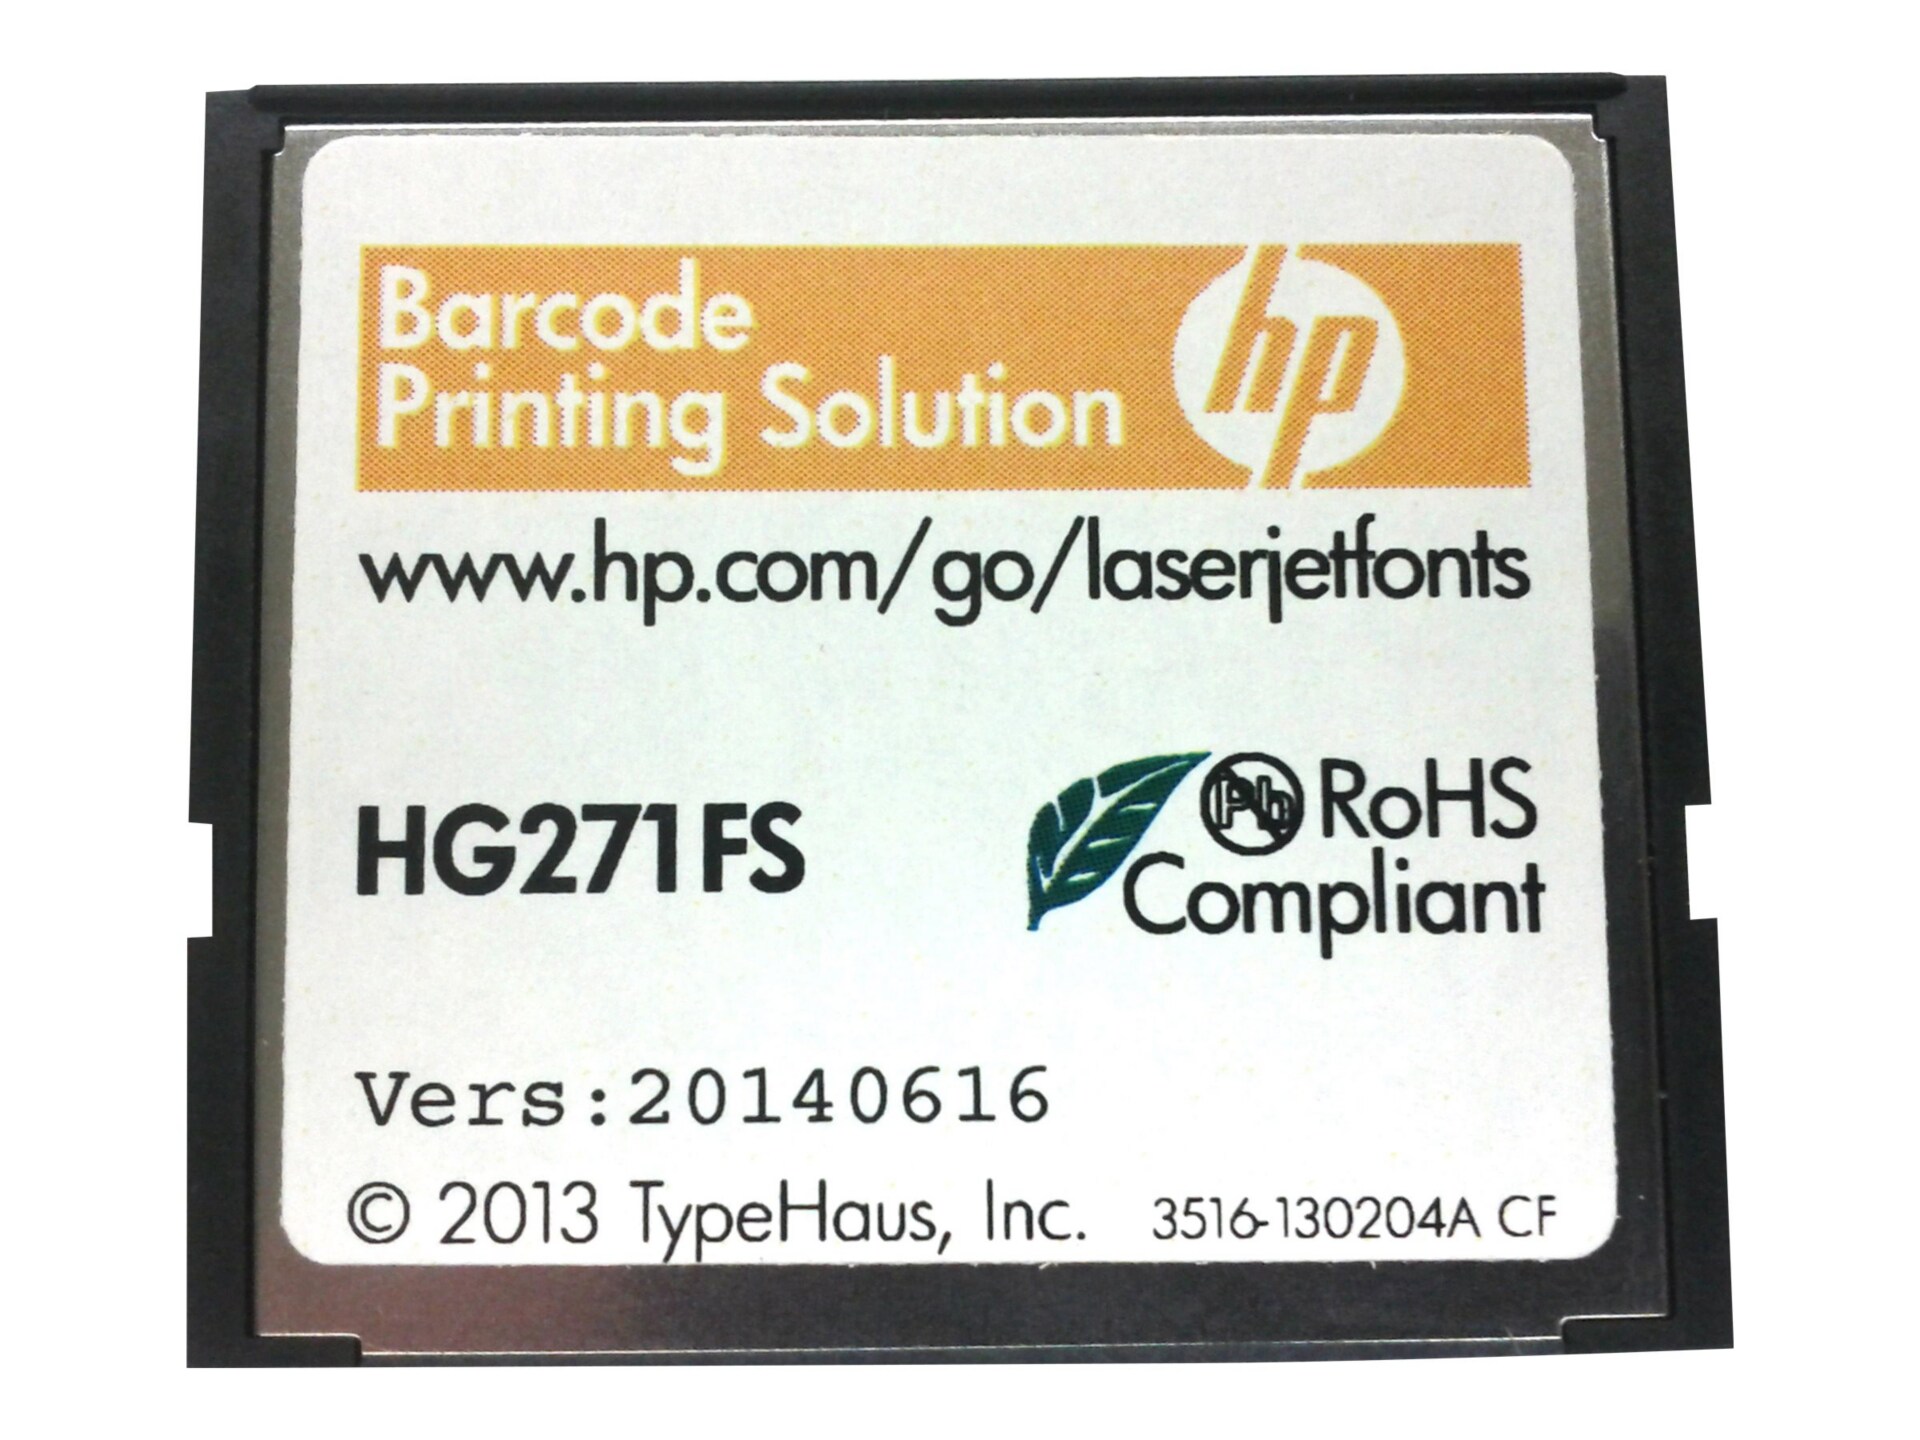 HP BarCode CF Printing Solution ROM